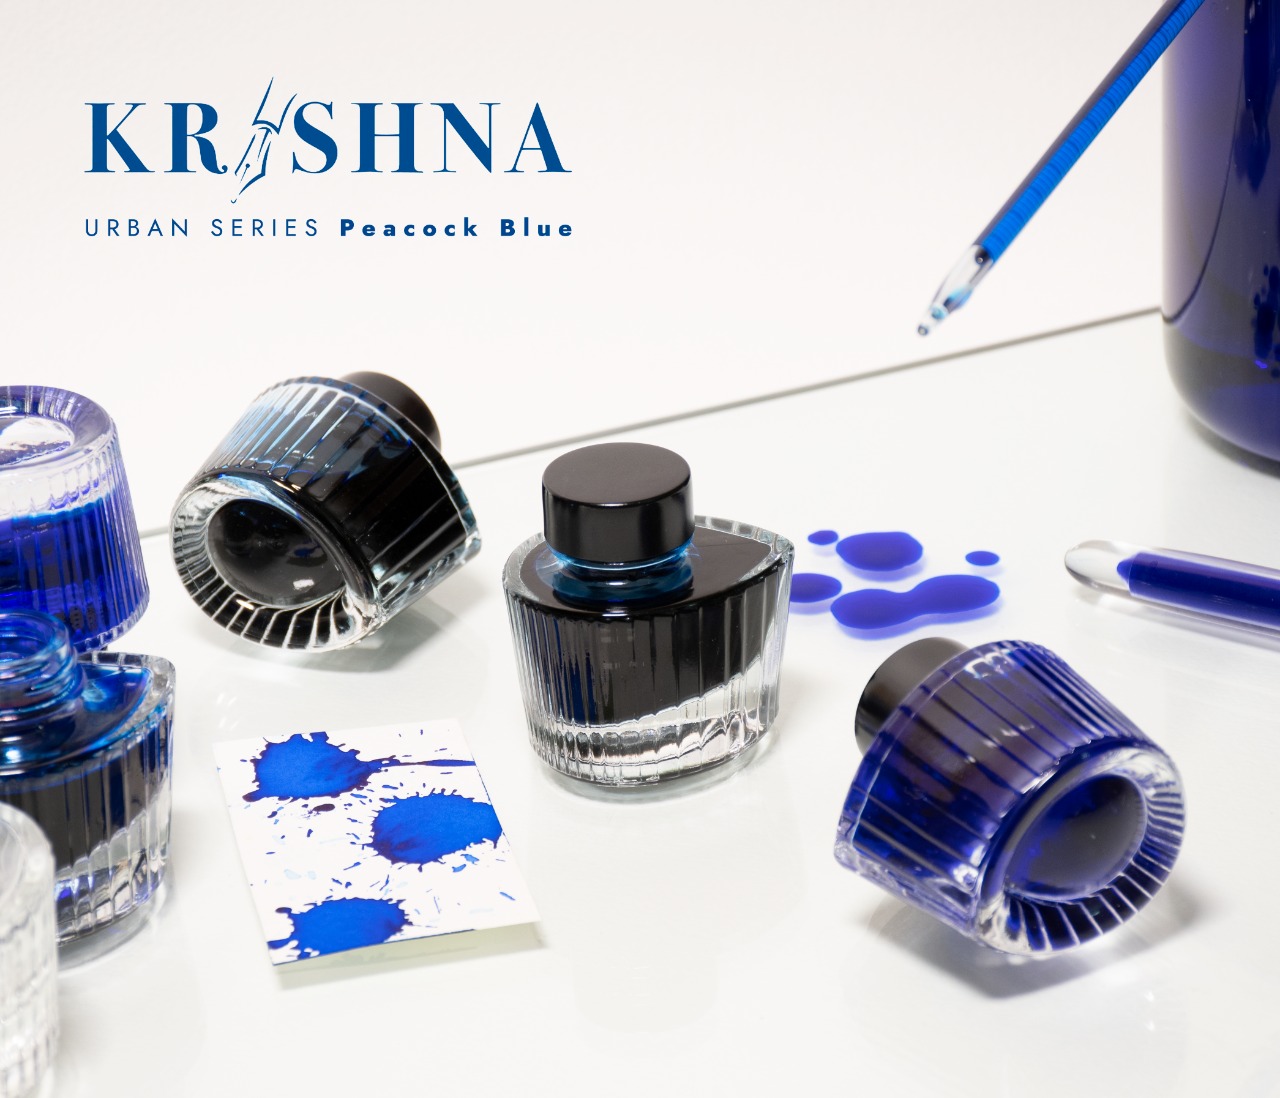 Krishna Urban Series - Peacock Blue 30ml